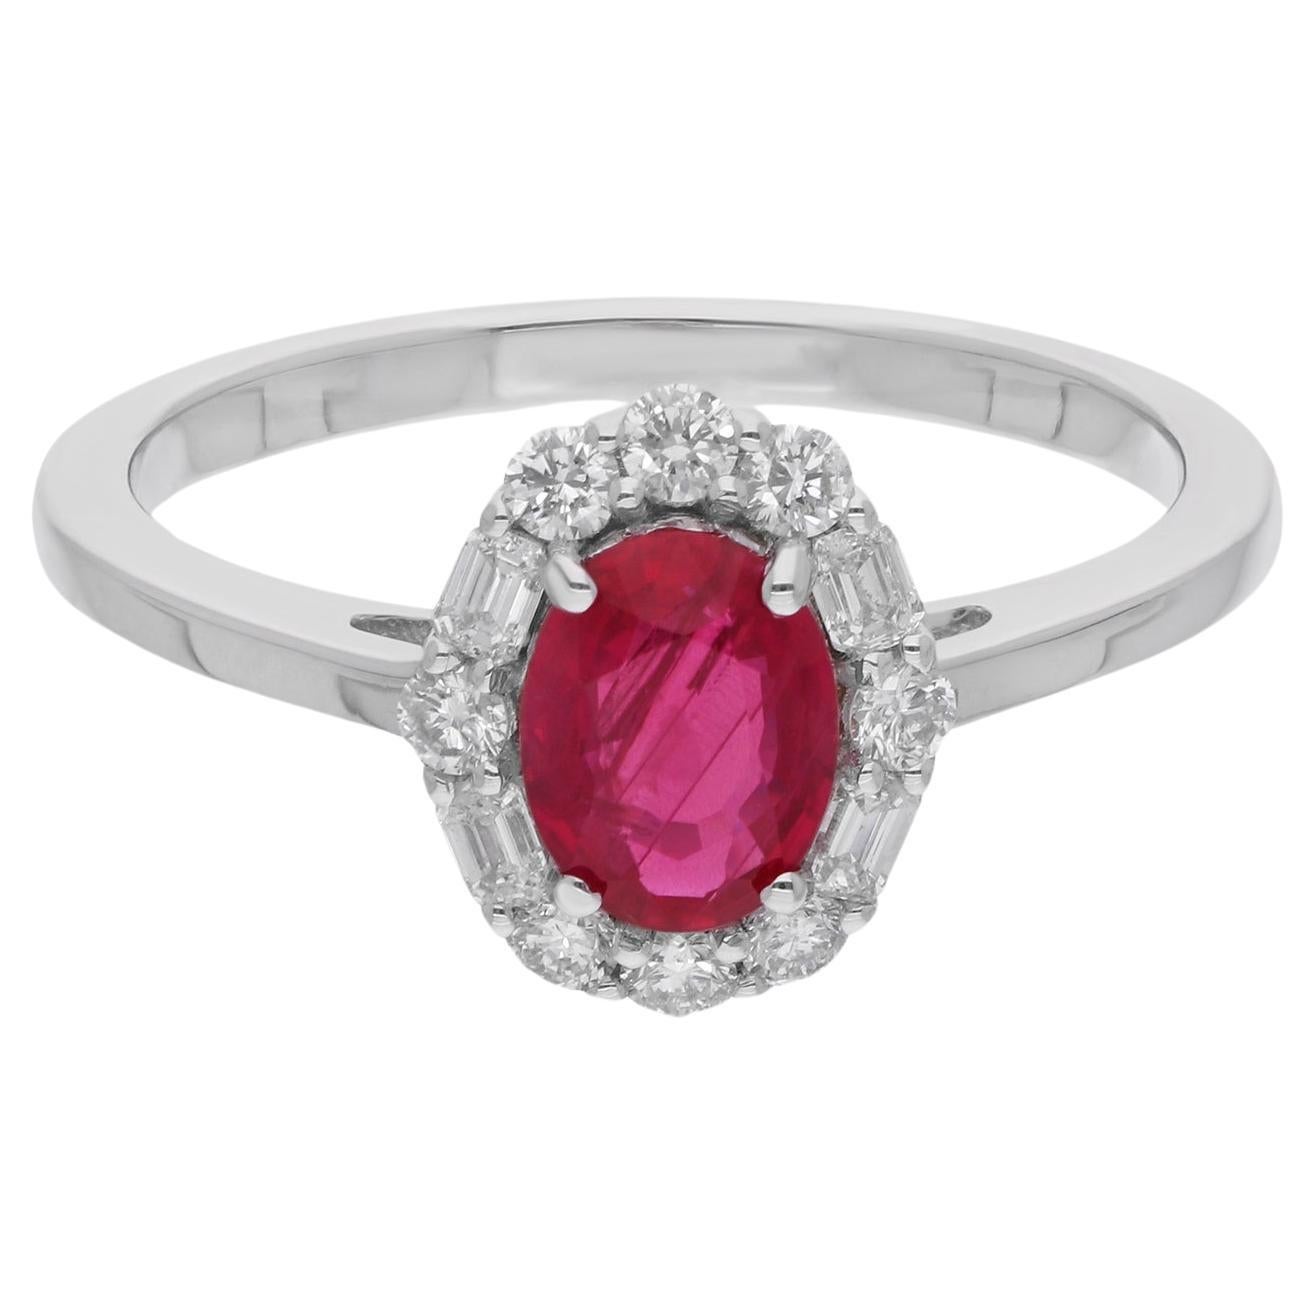 Natural Oval Ruby Gemstone Ring Diamond 18 Karat White Gold Handmade Jewelry